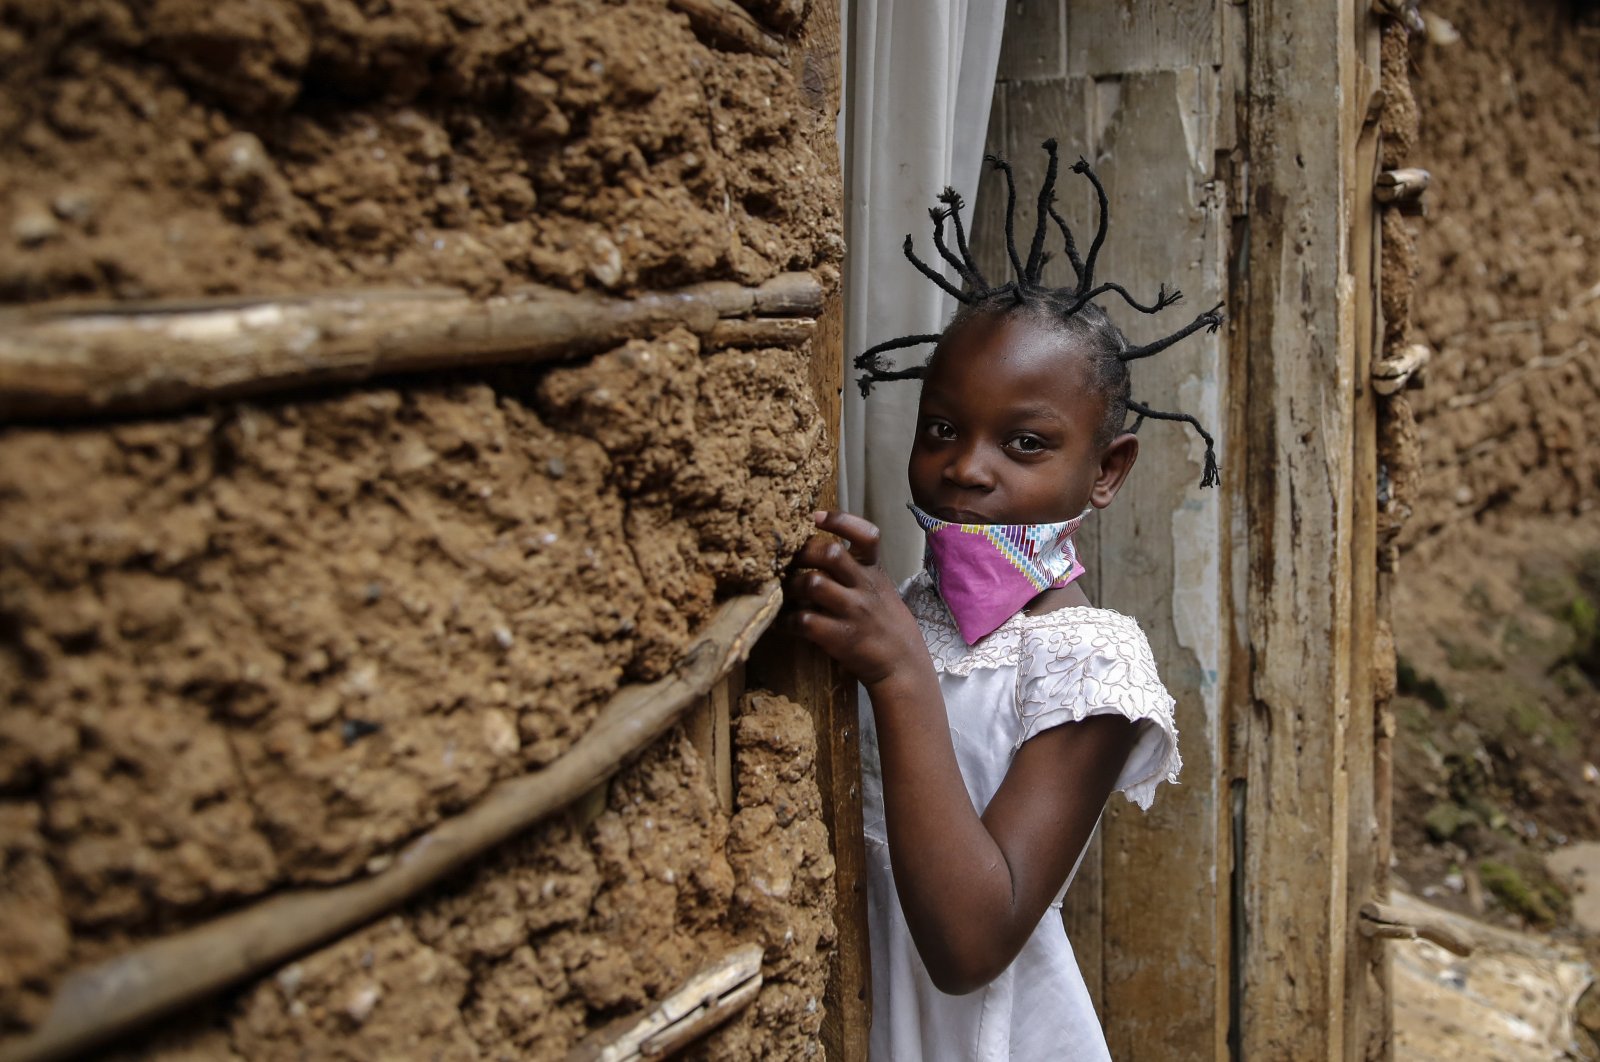 Jane Mbone, 7, arrives home after having her hair styled in the shape of the new coronavirus at the Mama Brayo Beauty Salon in the Kibera slum, or informal settlement, in Nairobi, Kenya, May 3, 2020. (AP Photo)